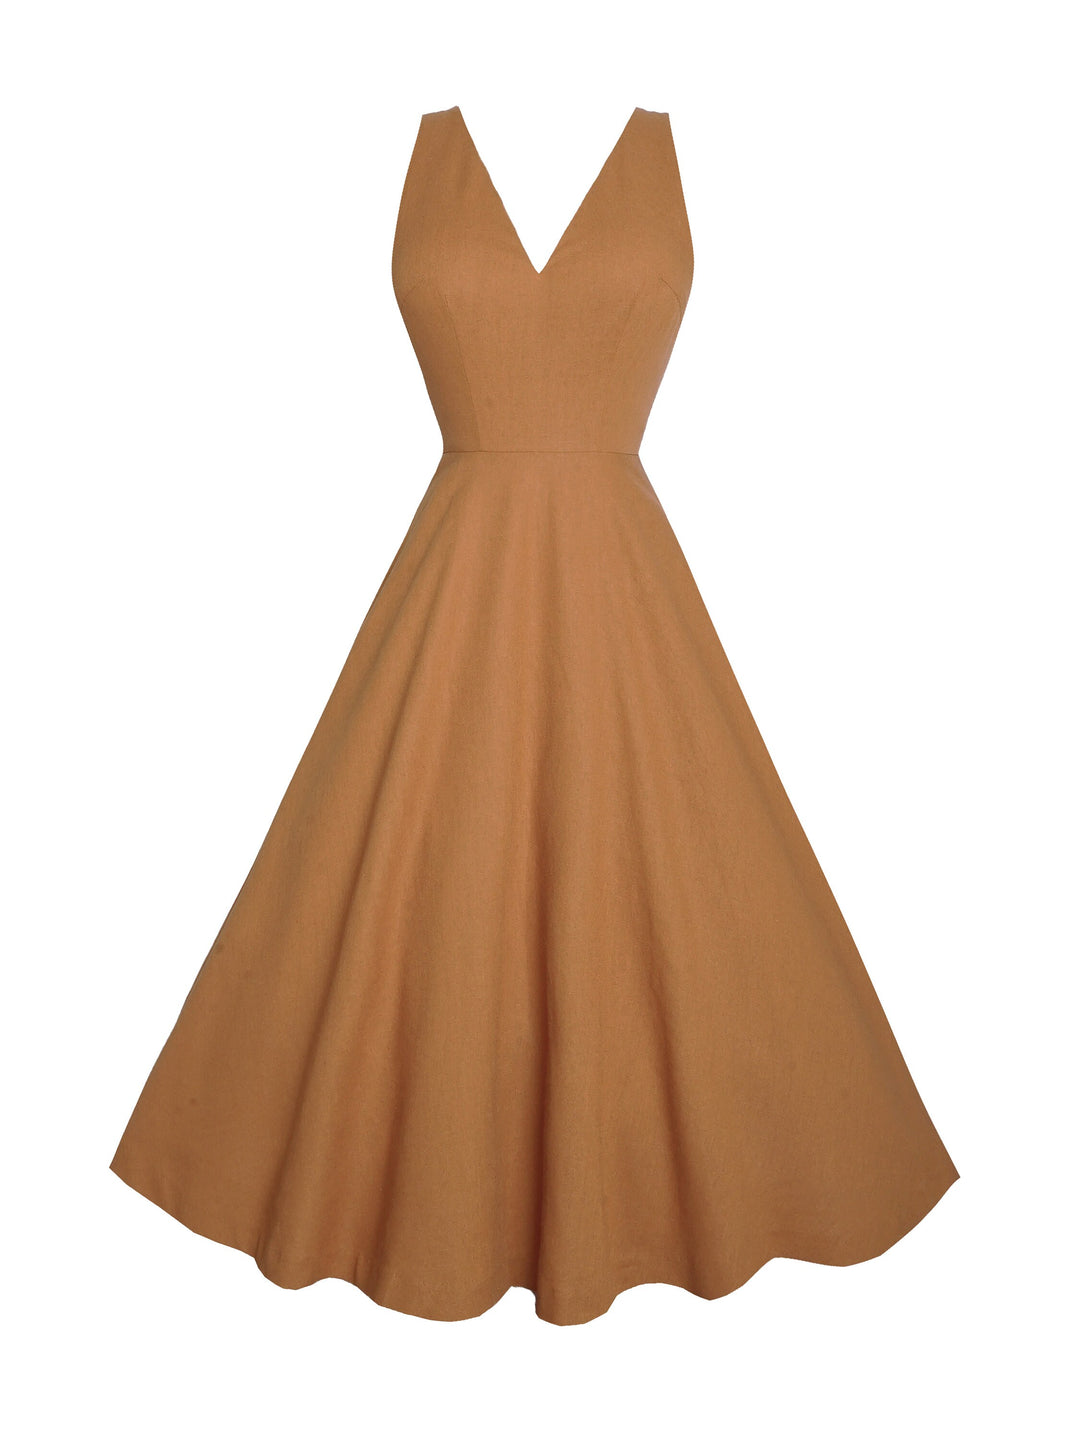 MTO - Diana Dress in Caramel Linen